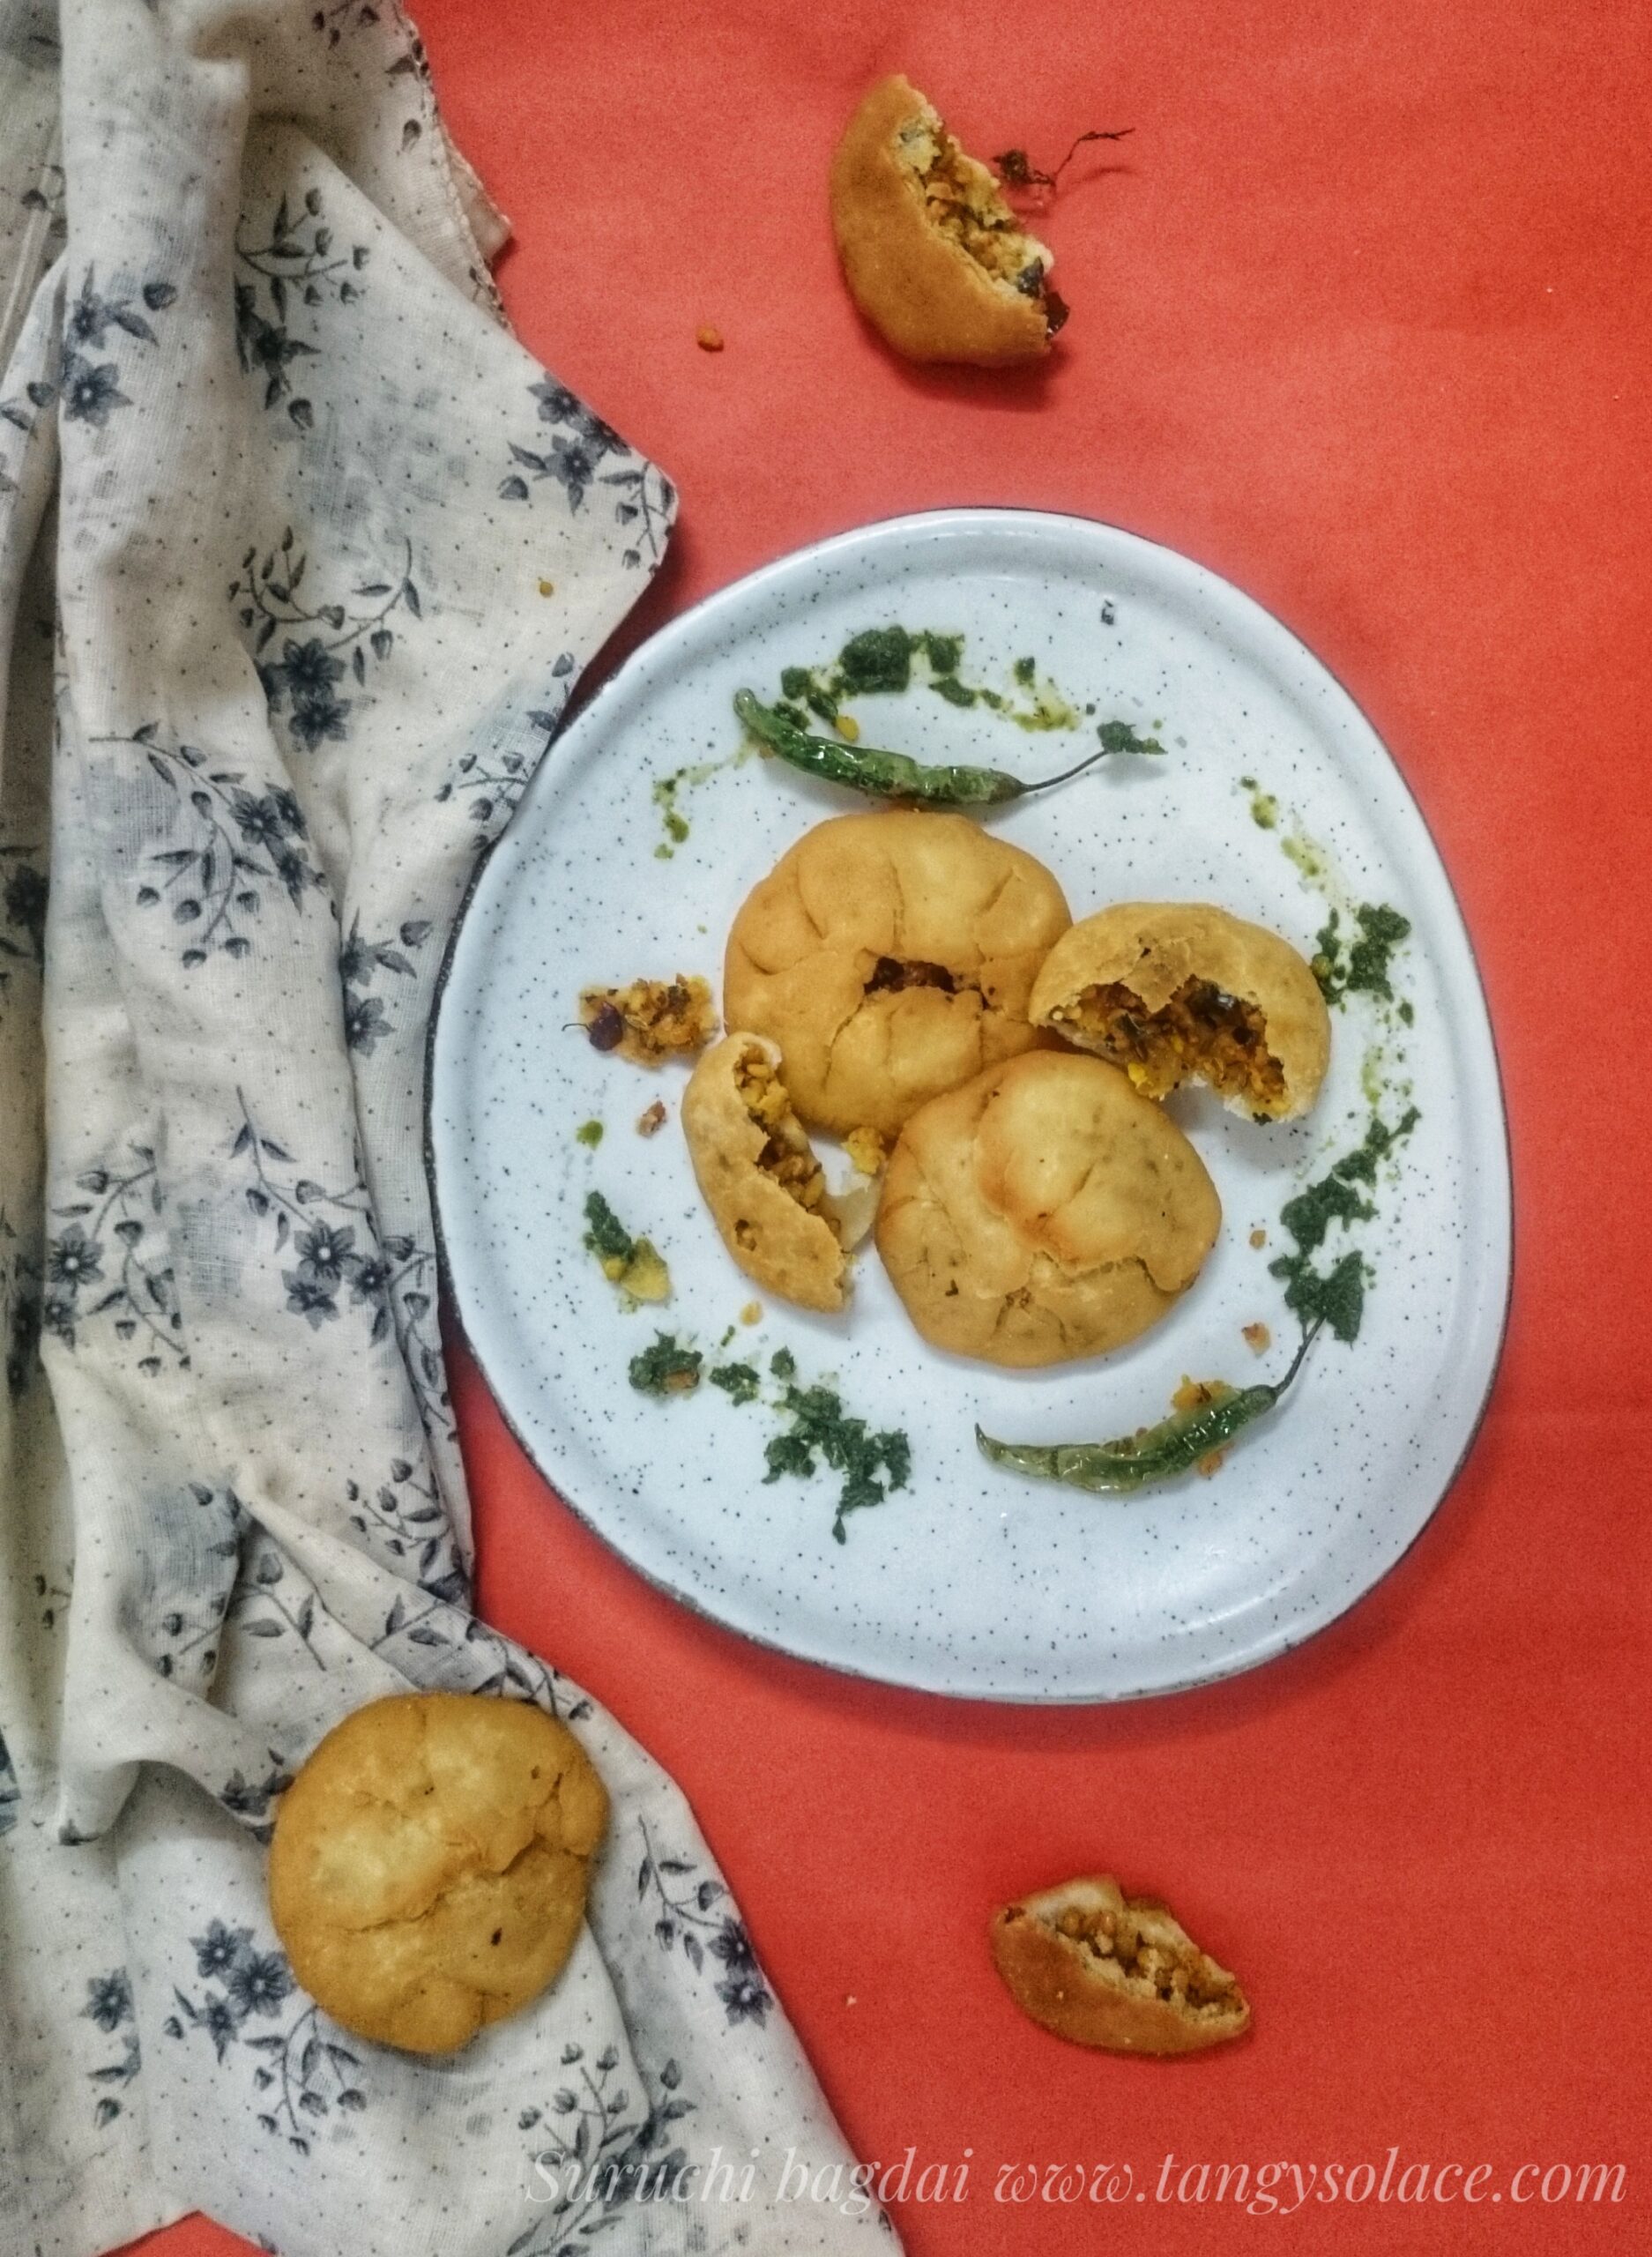 Moongdal kachori (Fried moongdal pastry)